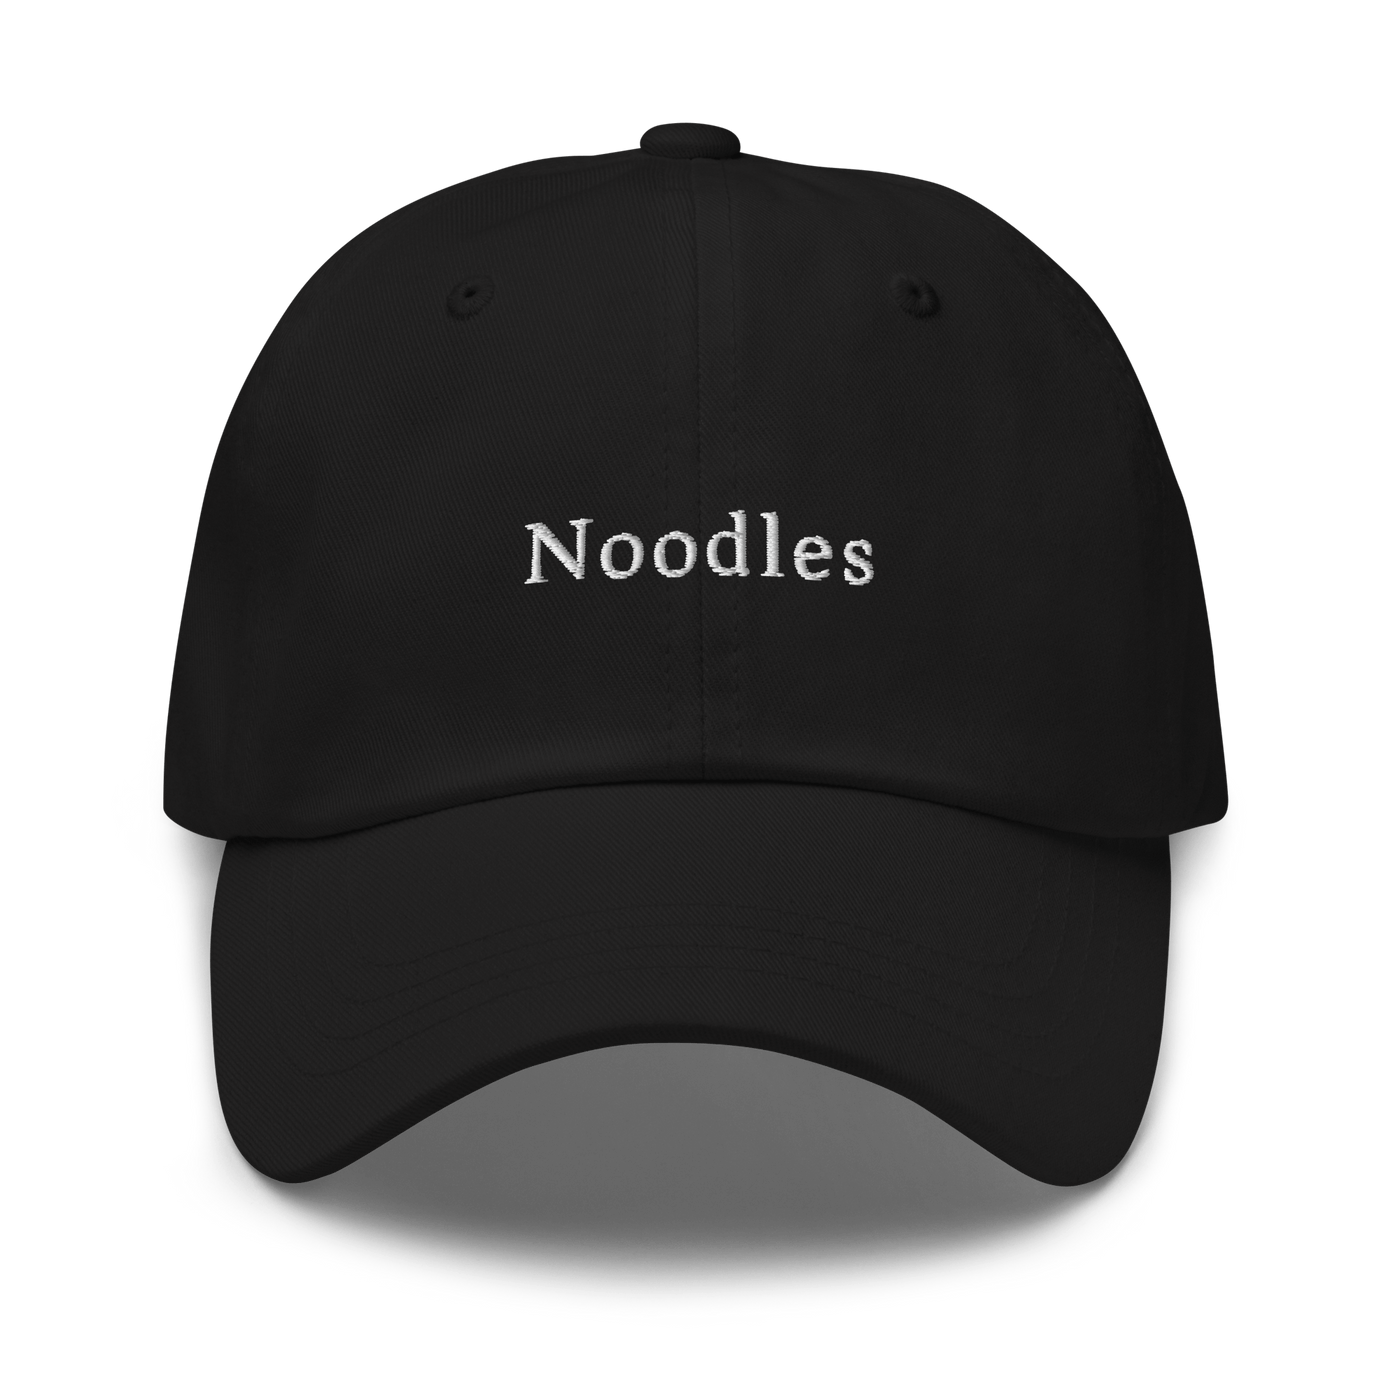 Noodles Dad hat - Black - - Just Another Cap Store